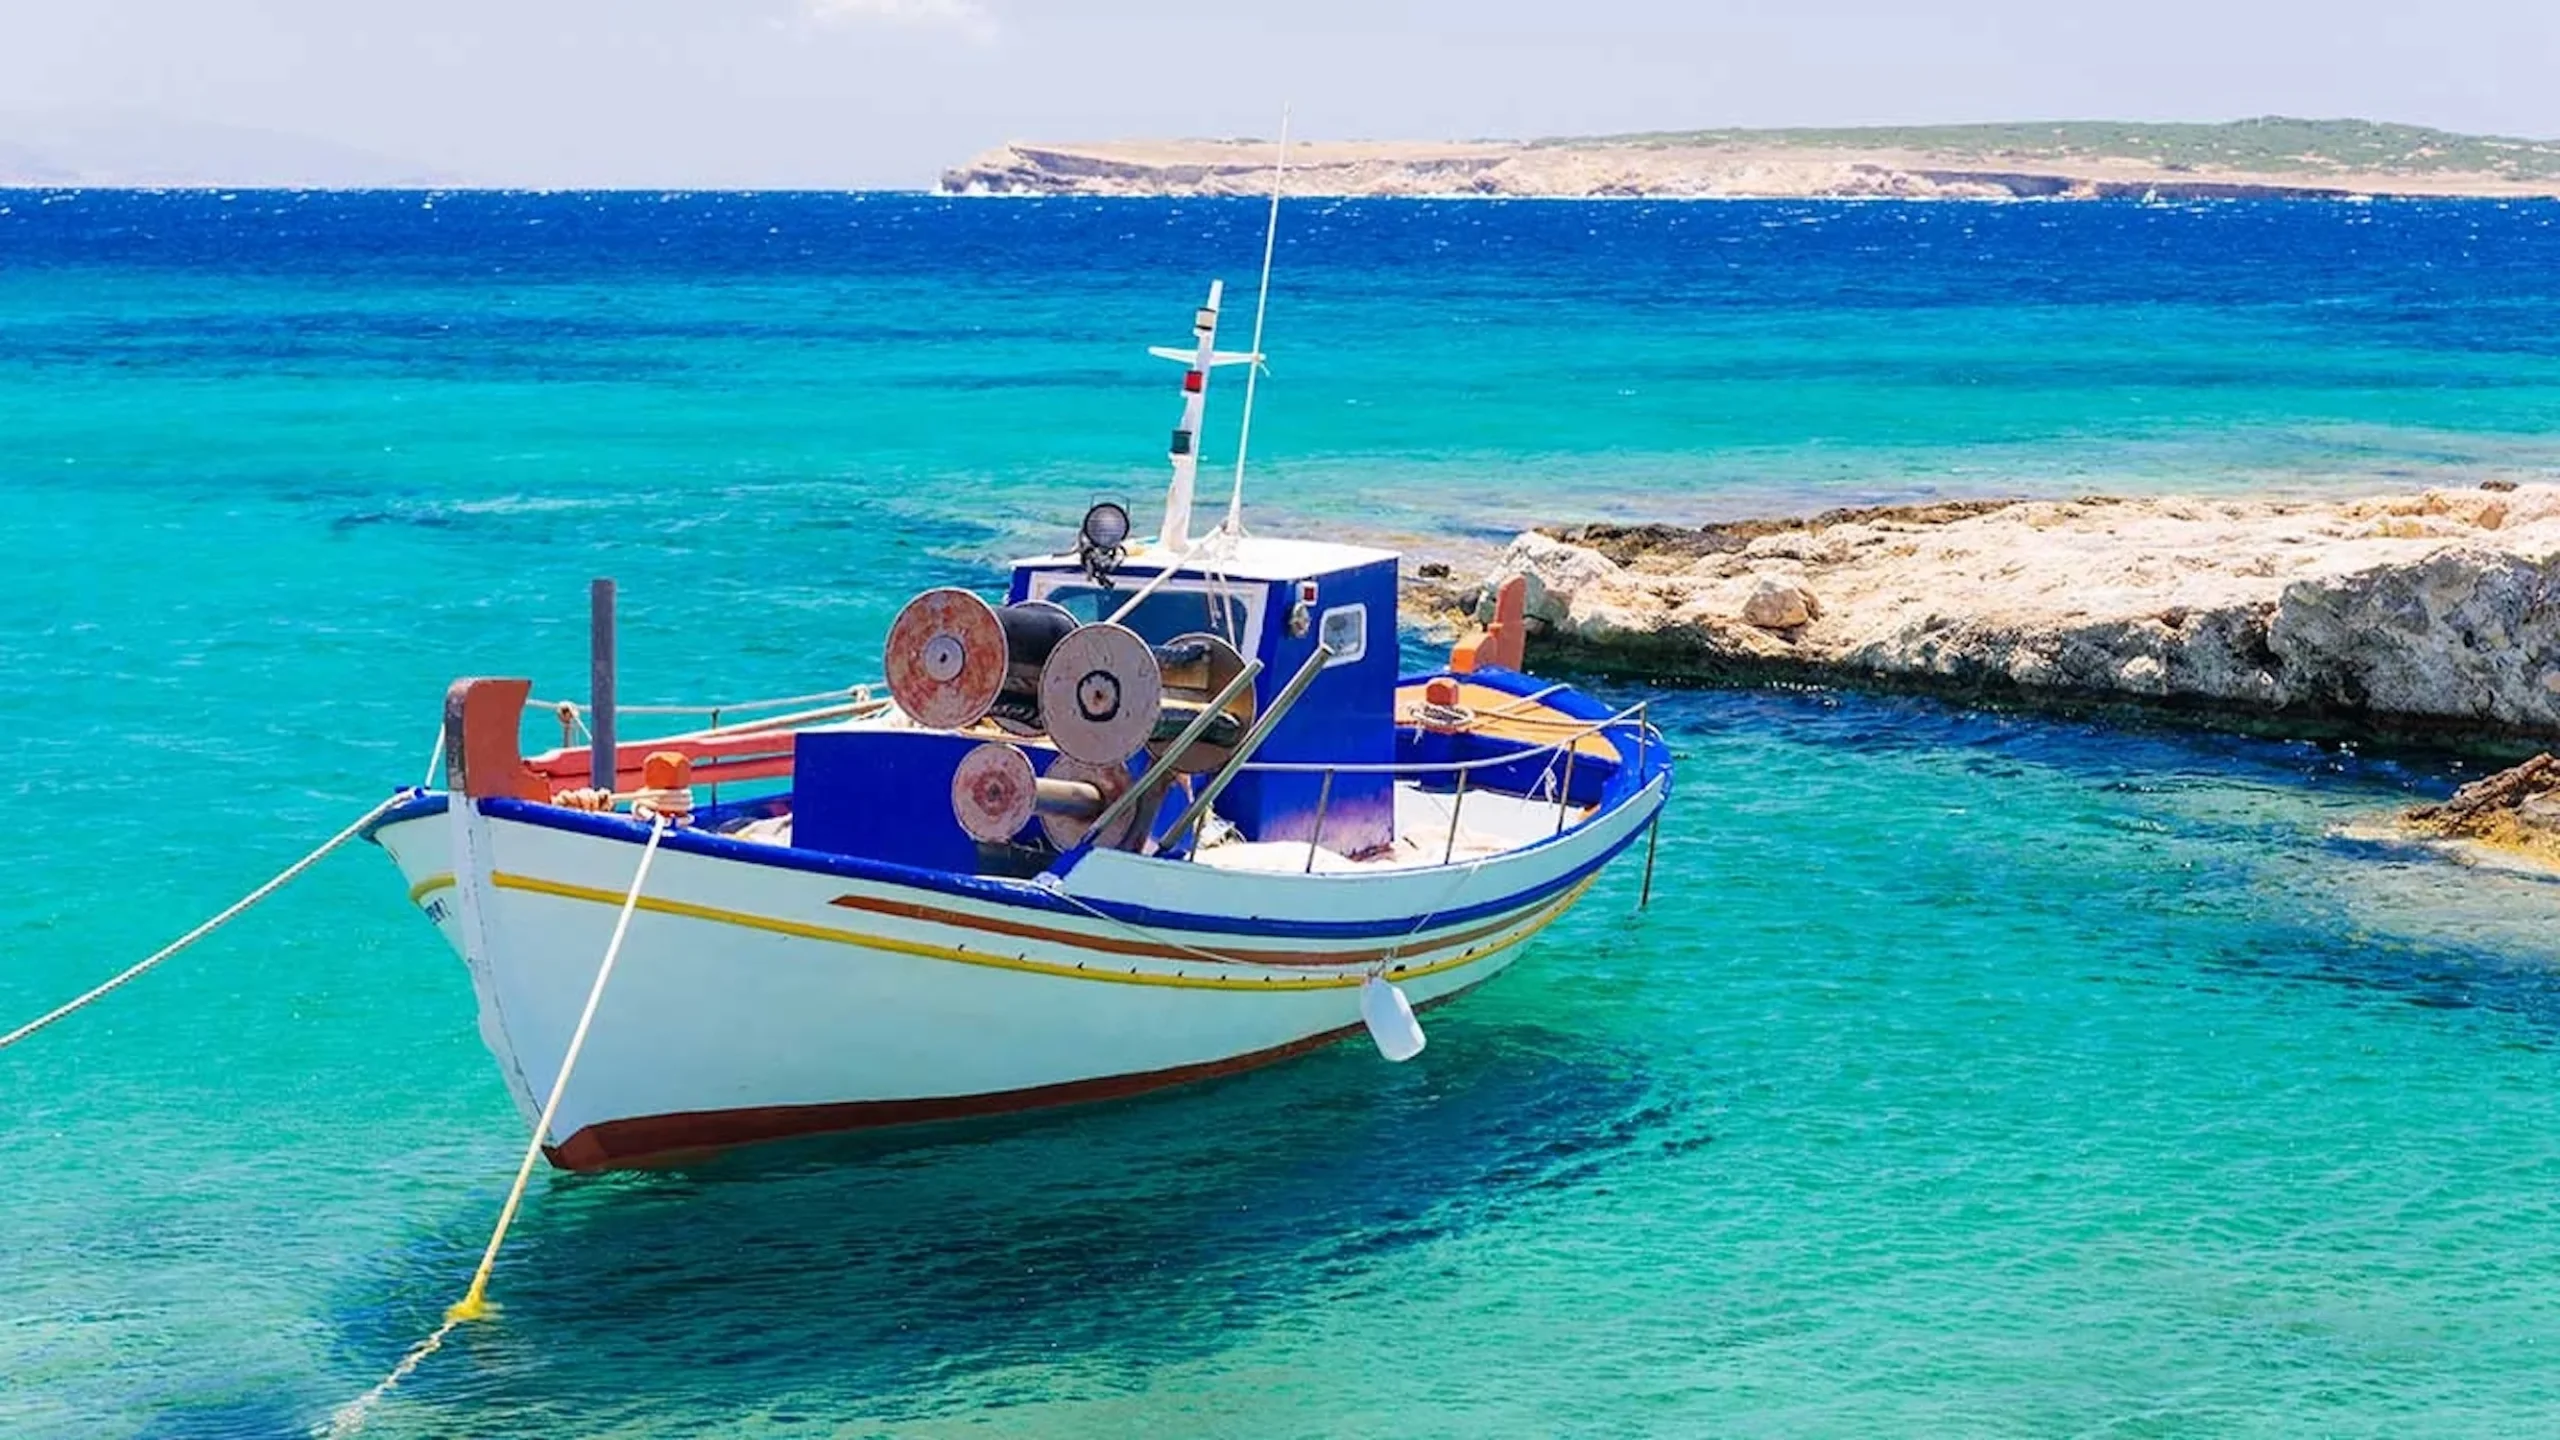 About Naxos, Naxos, Greece Where Beauty and History Unite